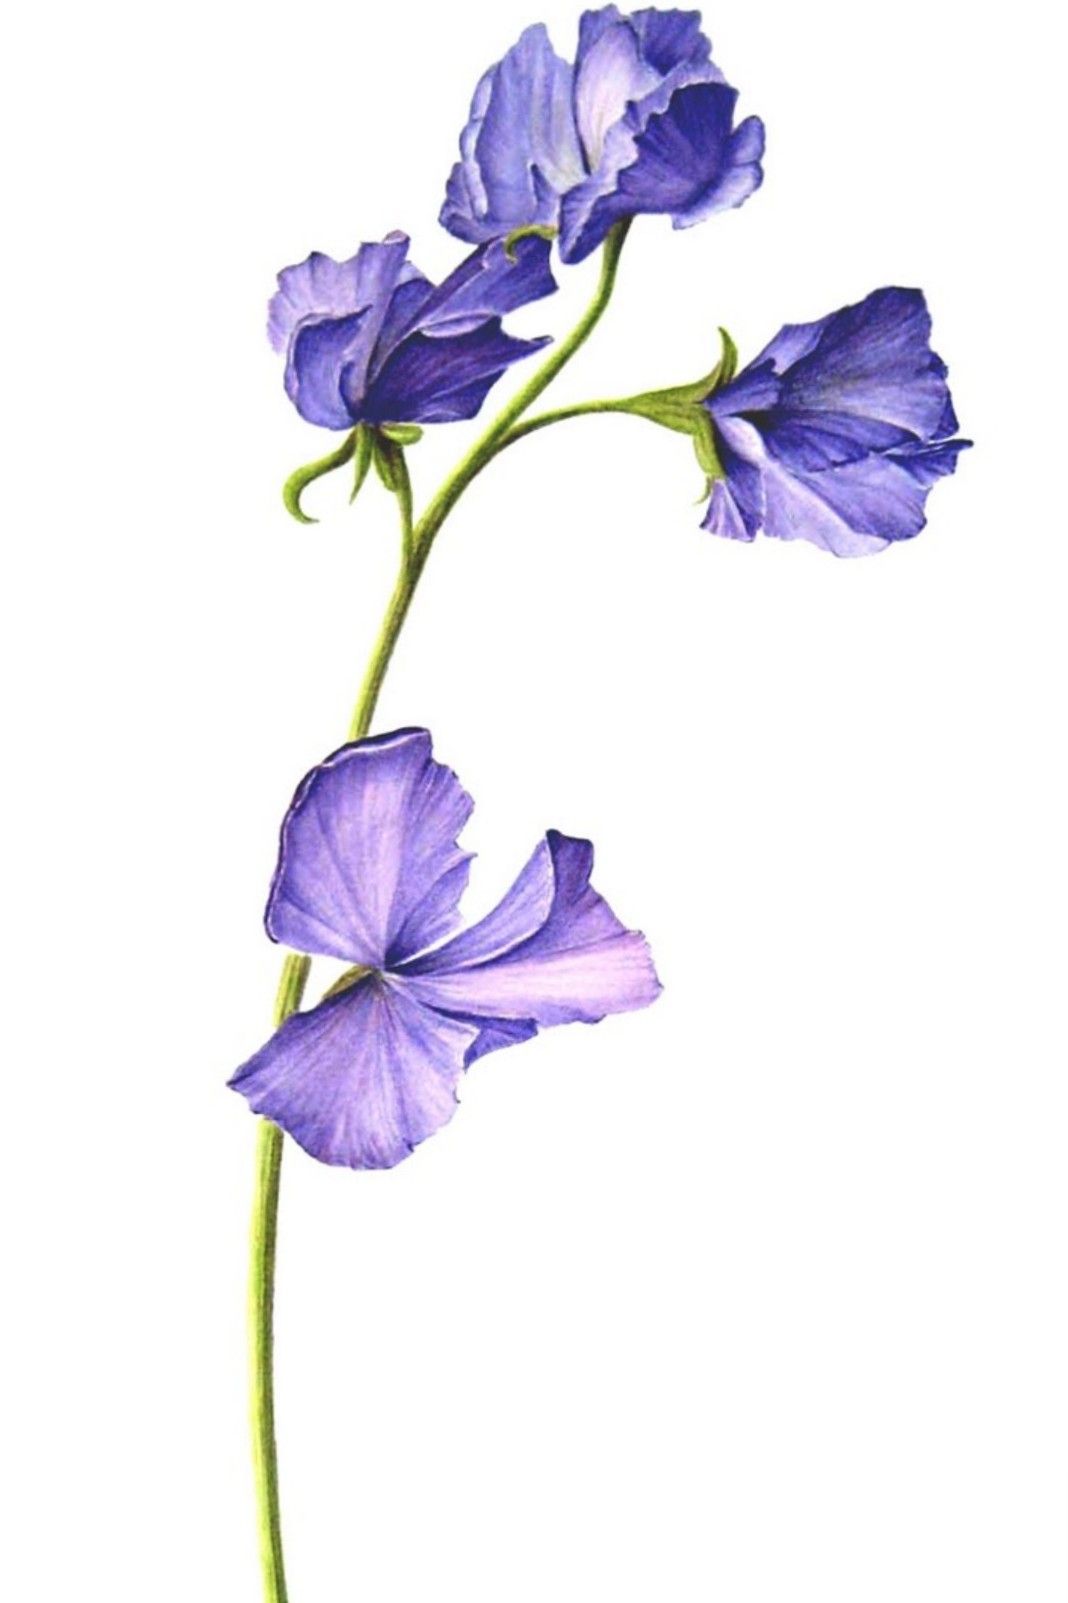 590 Sweet Pea Flower Illustrations RoyaltyFree Vector Graphics  Clip  Art  iStock  Sweet pea flower on white